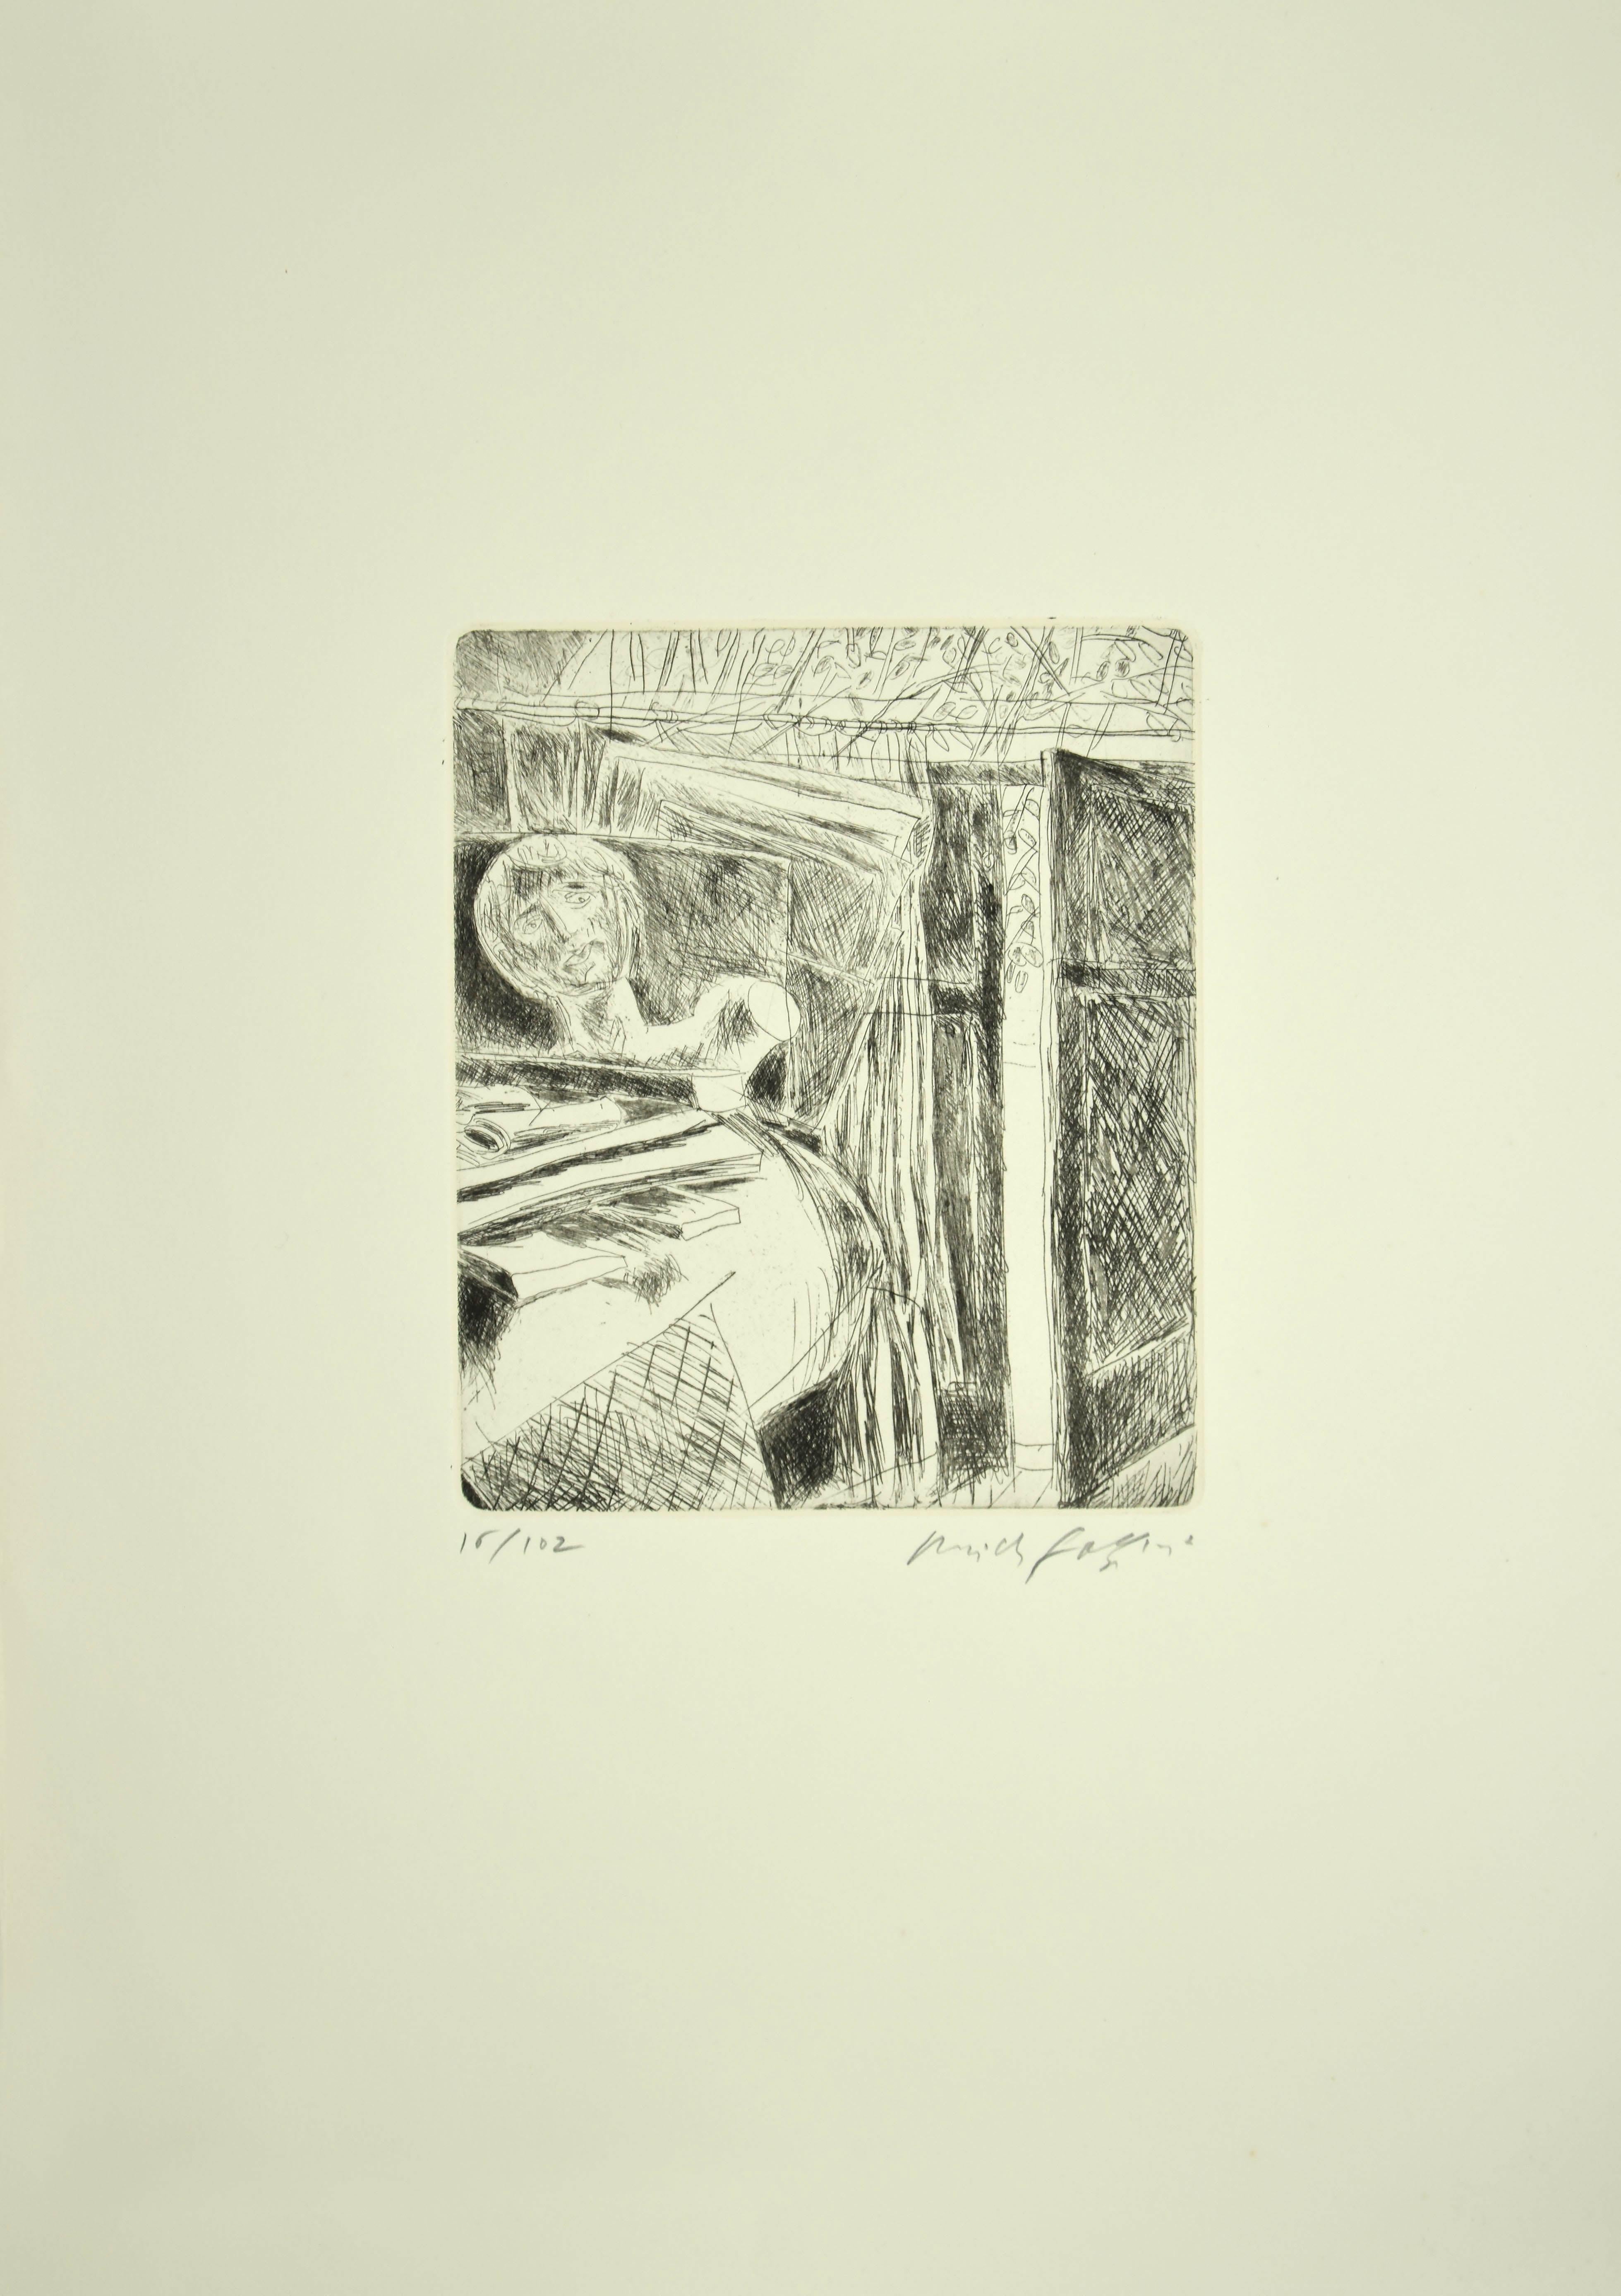 In the Studio - Original Etching by P. Fazzini - 1964 - Print by Pericle Fazzini